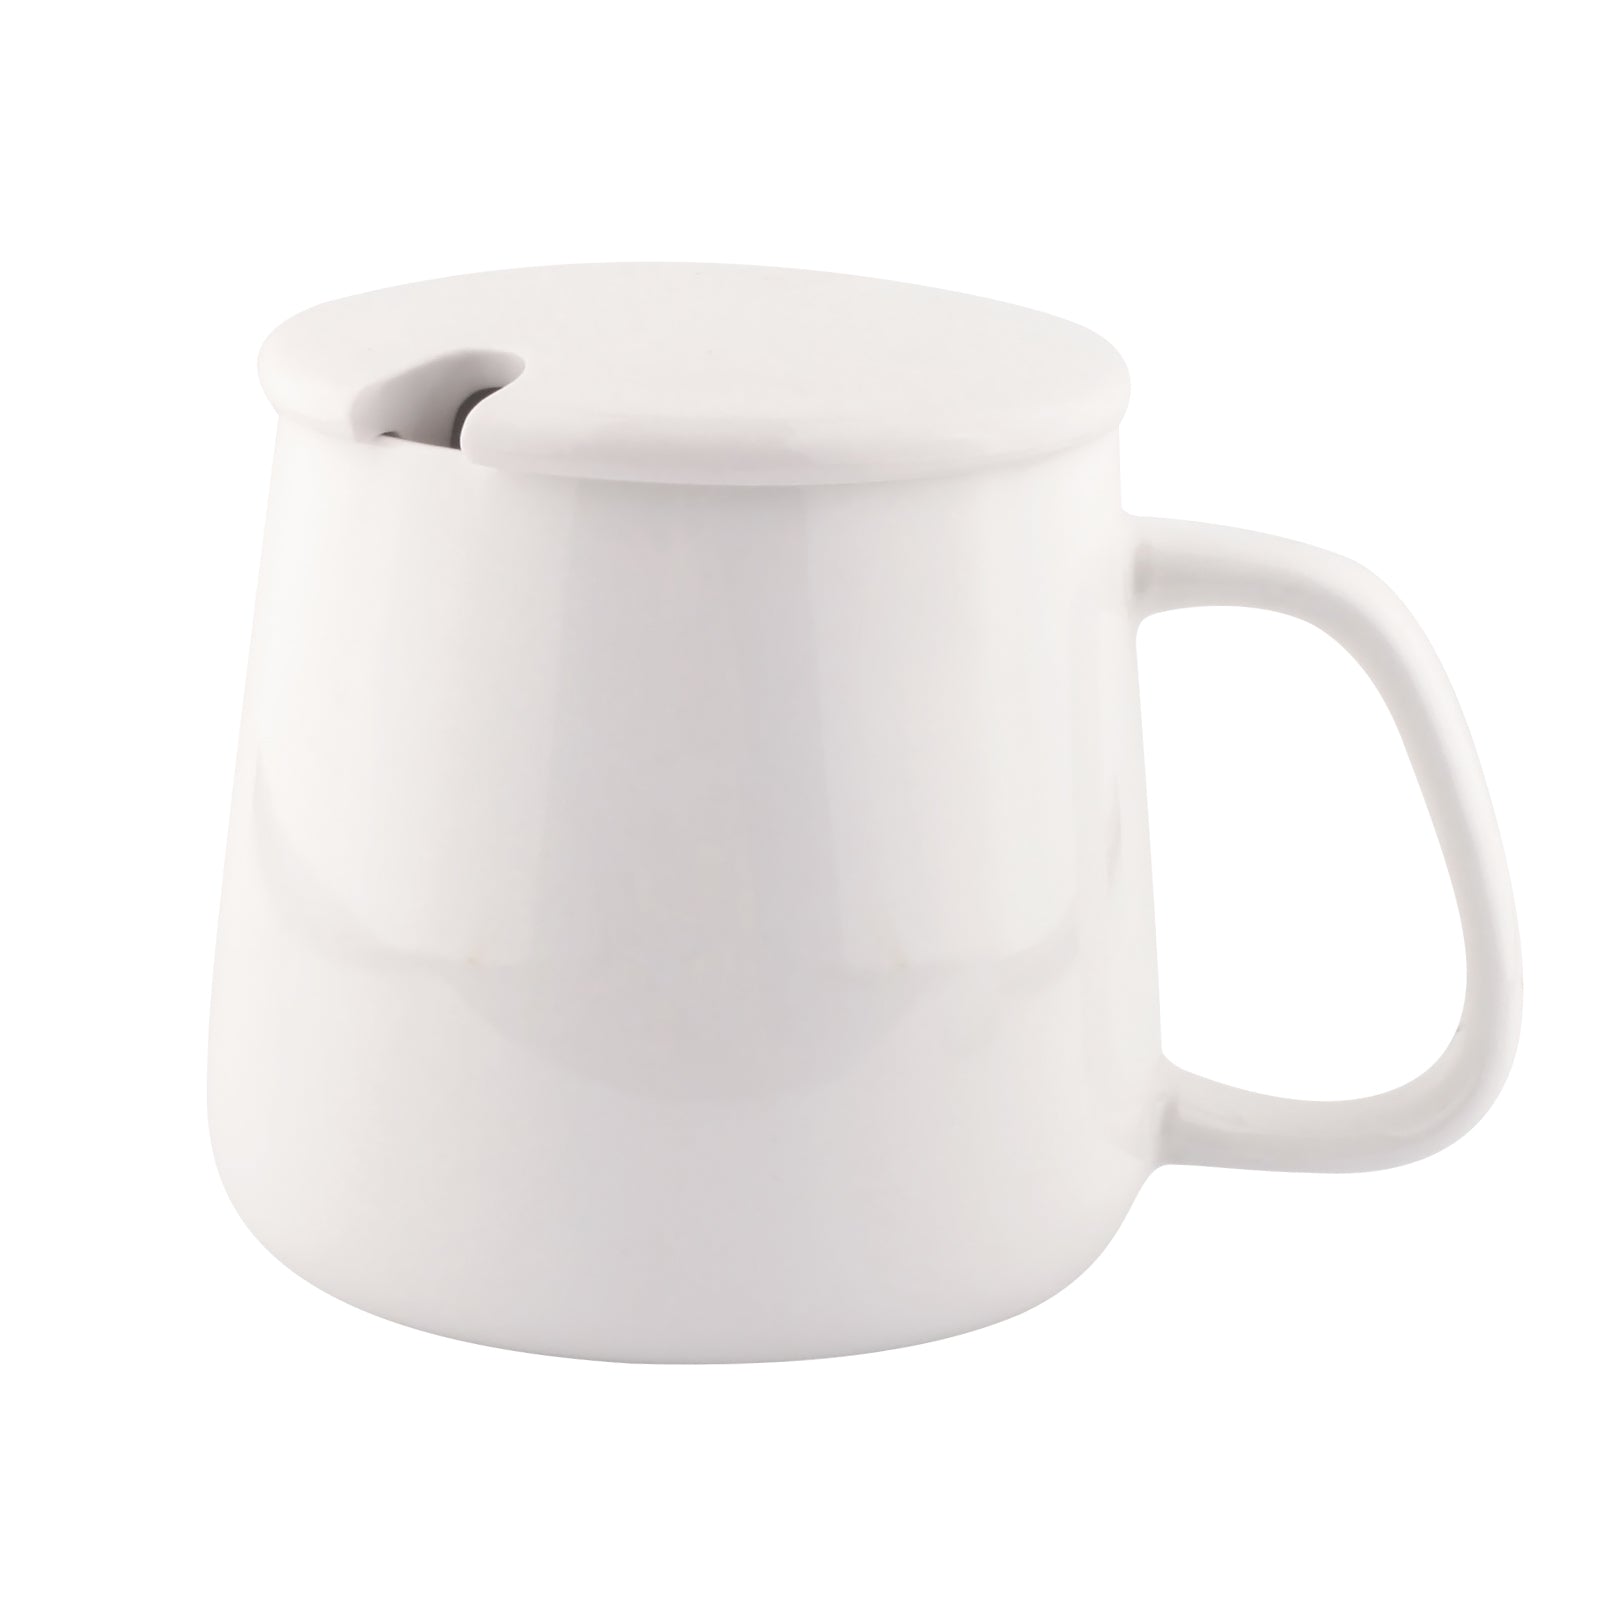 VOBAGA 14 OZ Porcelain Coffee&Tea Mug with Lid and Flat-Bottom, Gifts for Tea Lover (Black)